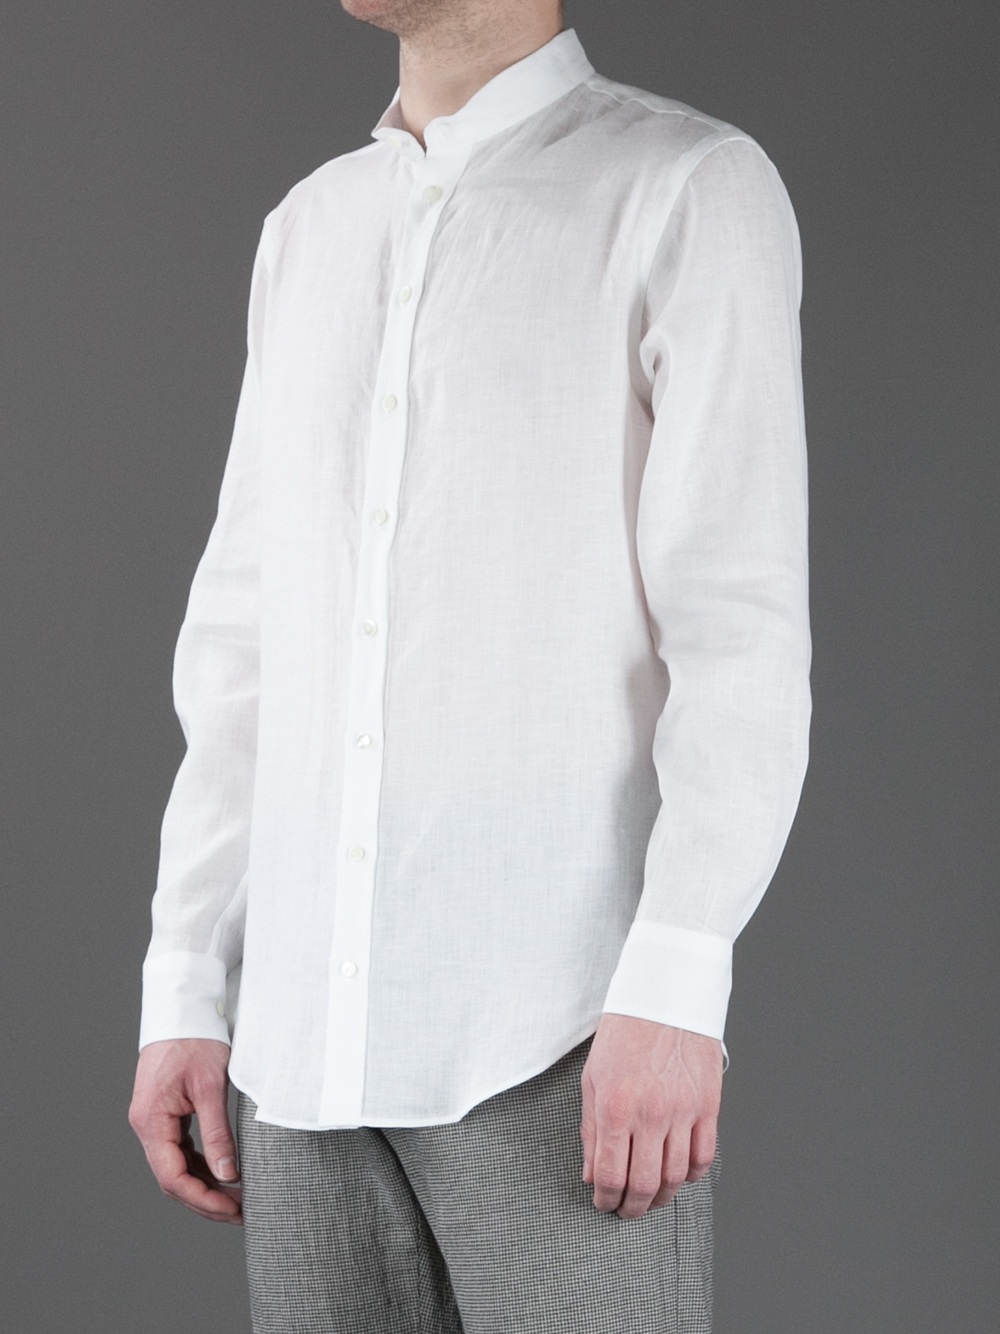 Giorgio Armani Collarless Button Down Shirt in White for Men - Lyst